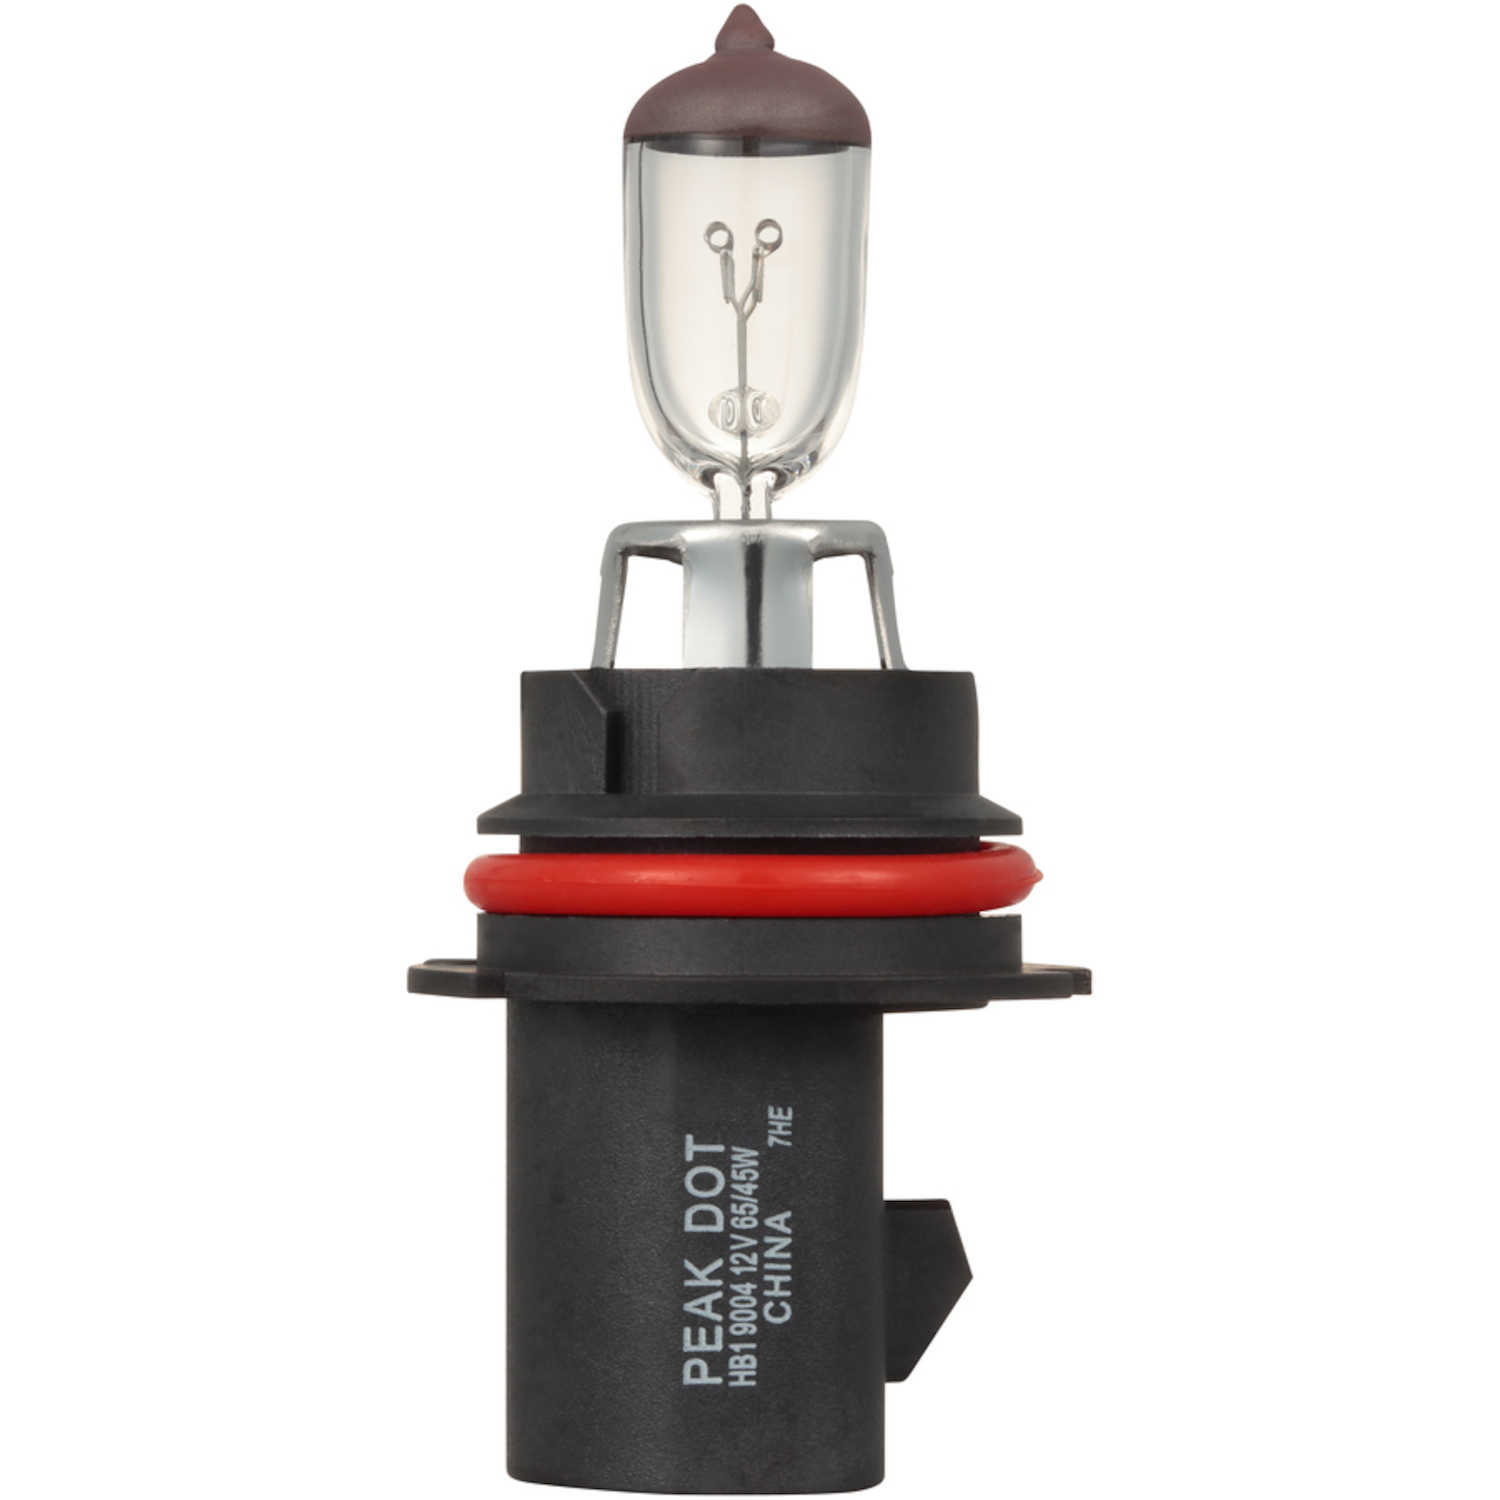 PEAK/OLD WORLD INDUSTRIES - Standard Lamp - Boxed (High Beam and Low Beam) - PKO 9004